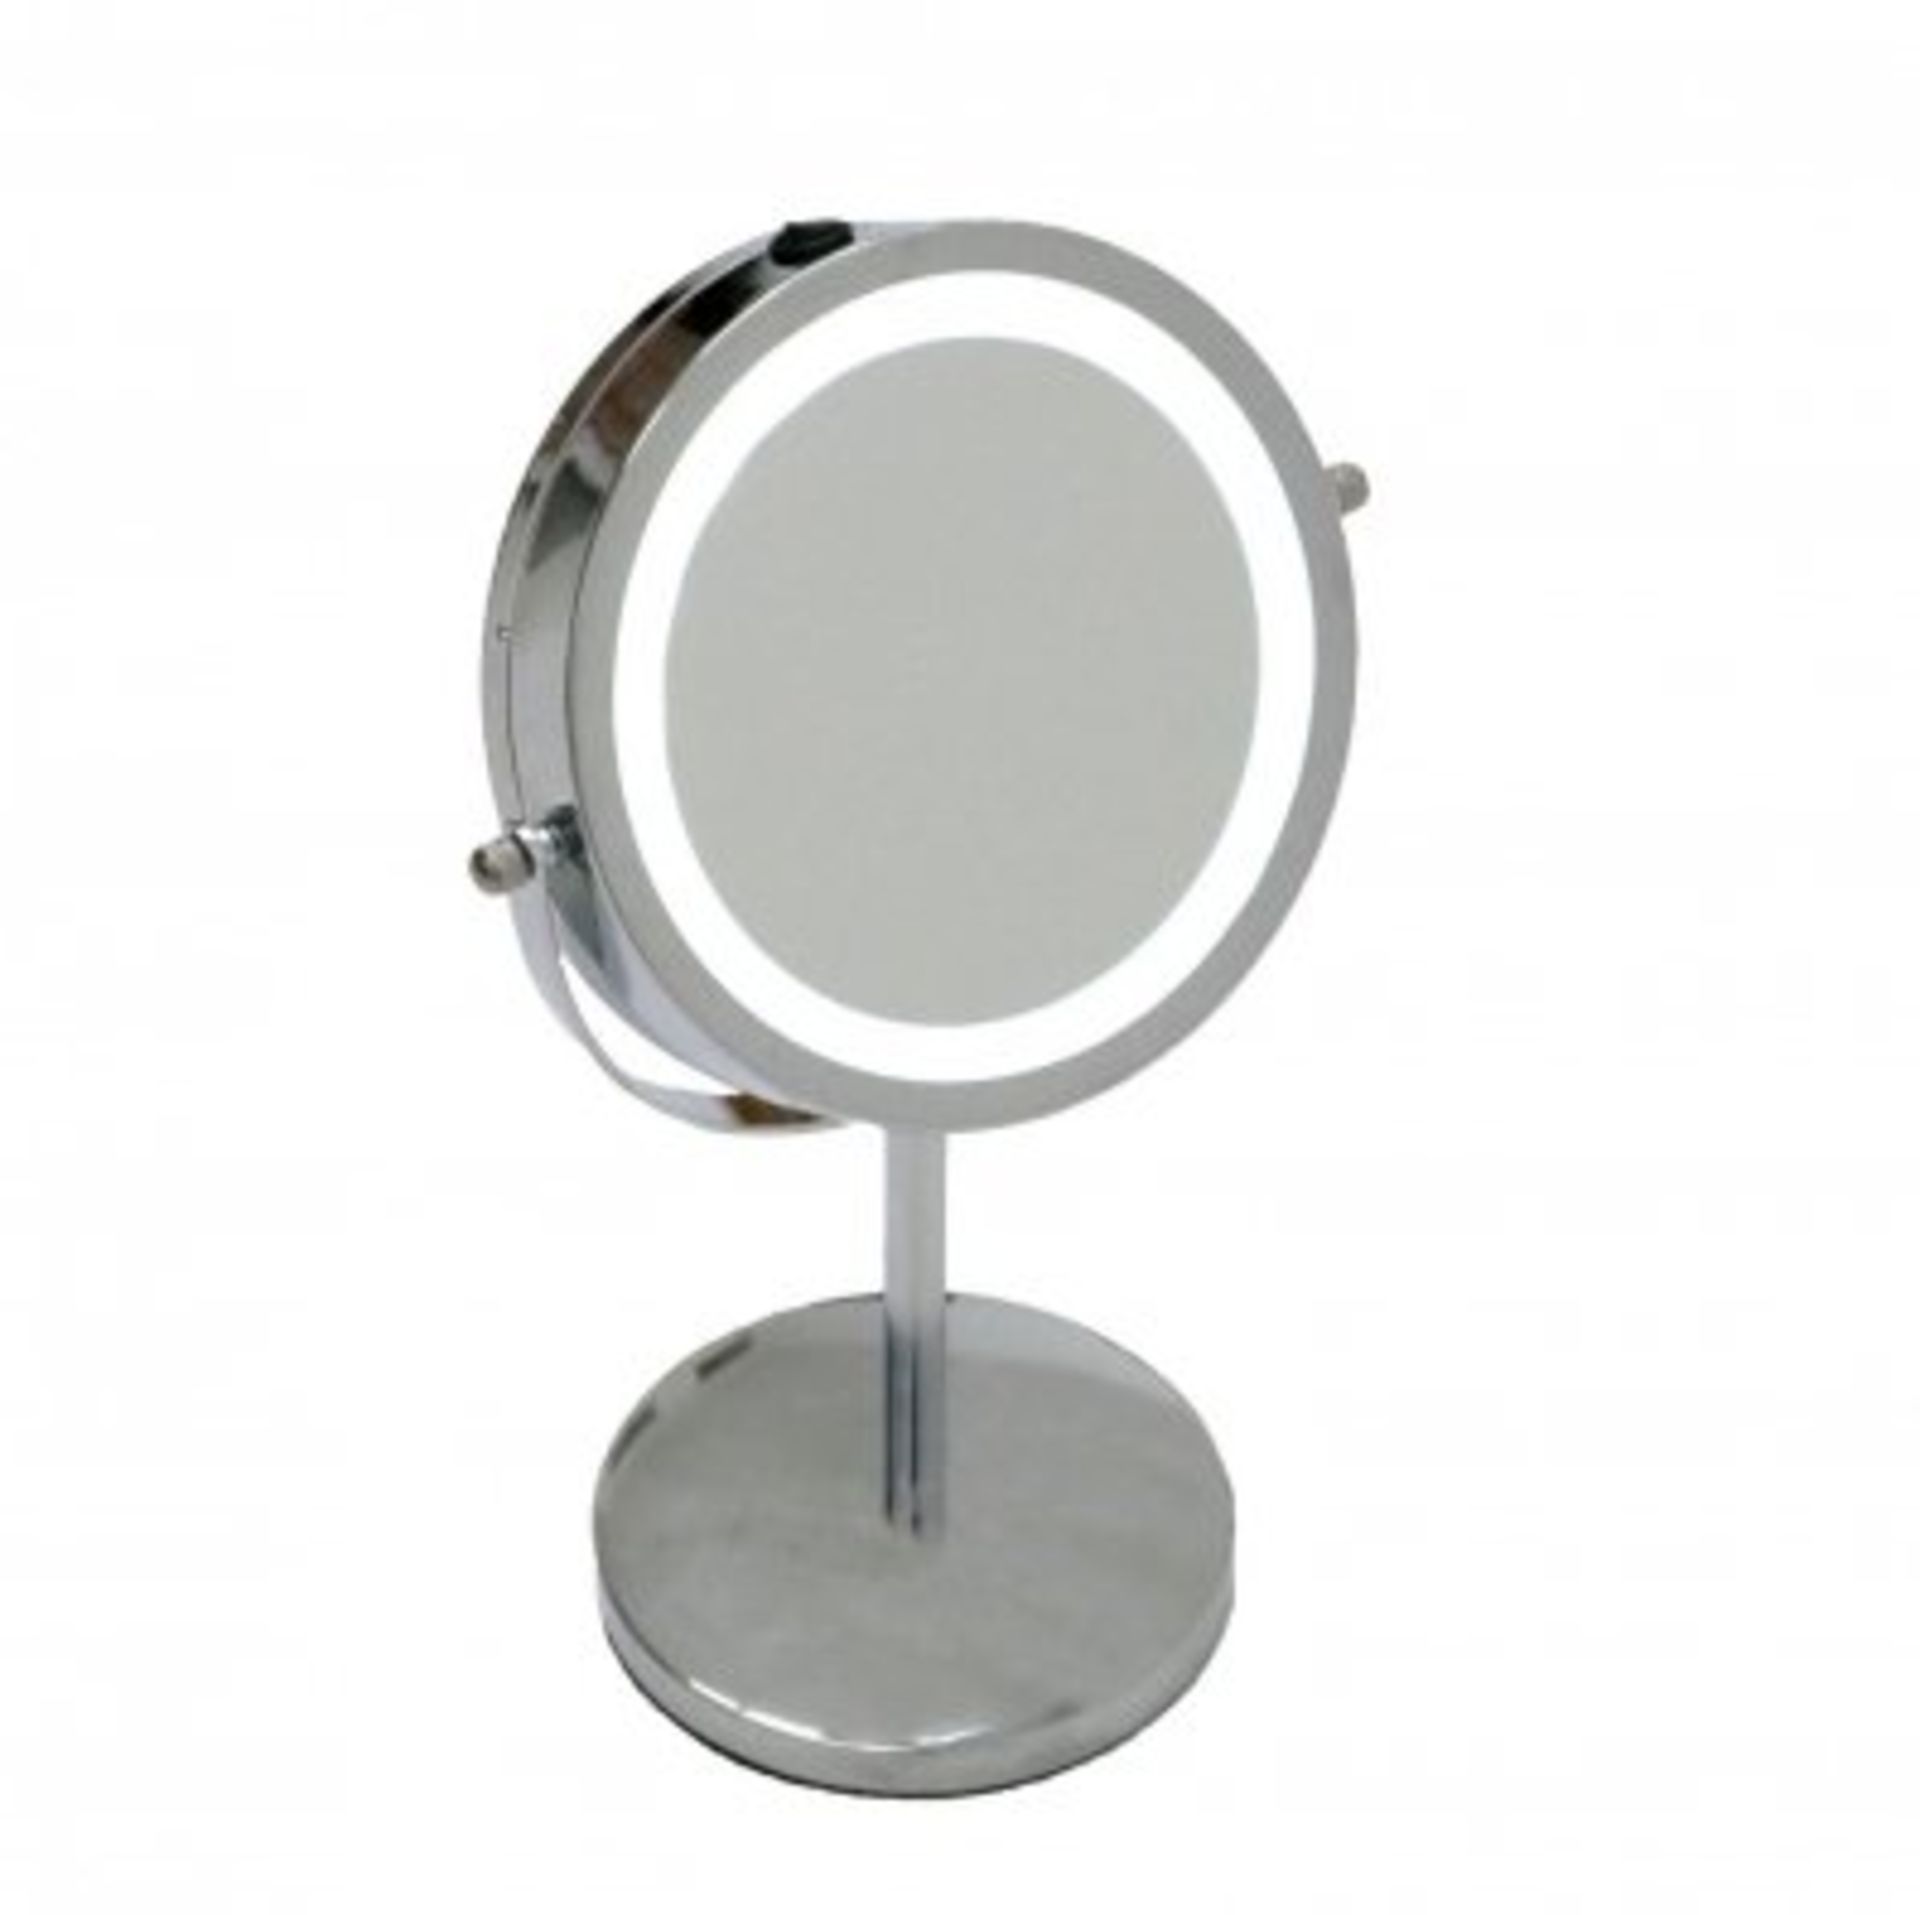 (RL125) 5x Magnifying Illuminated LED Makeup Cosmetic Shaving Mirror The illuminated mirro...